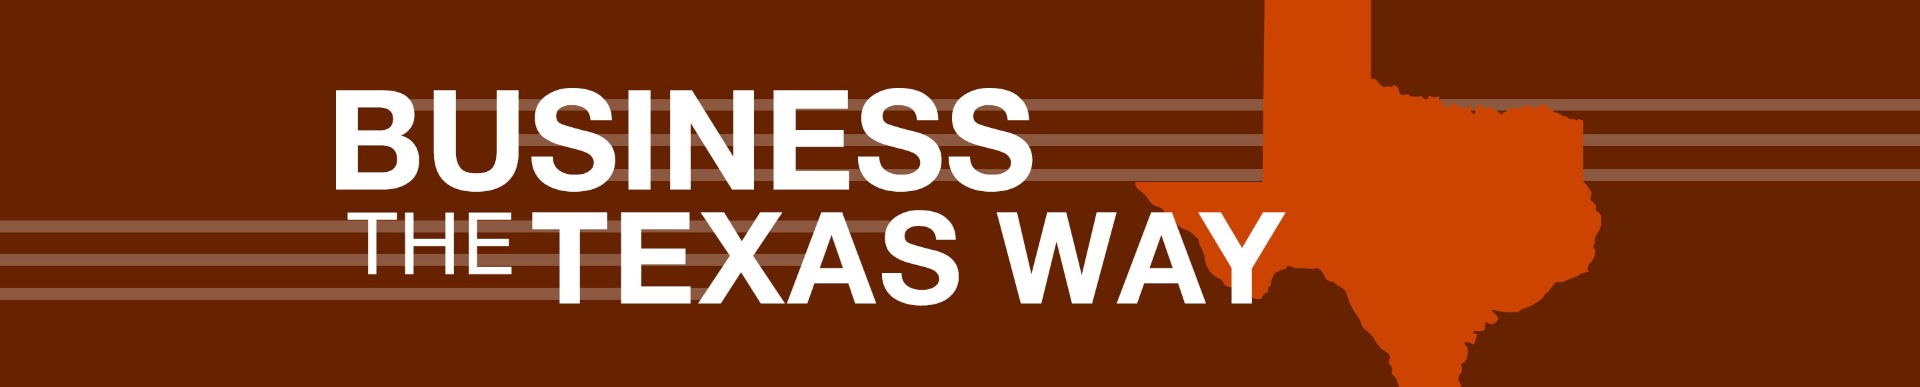 Business the Texas Way Banner - Texas Precious Metals